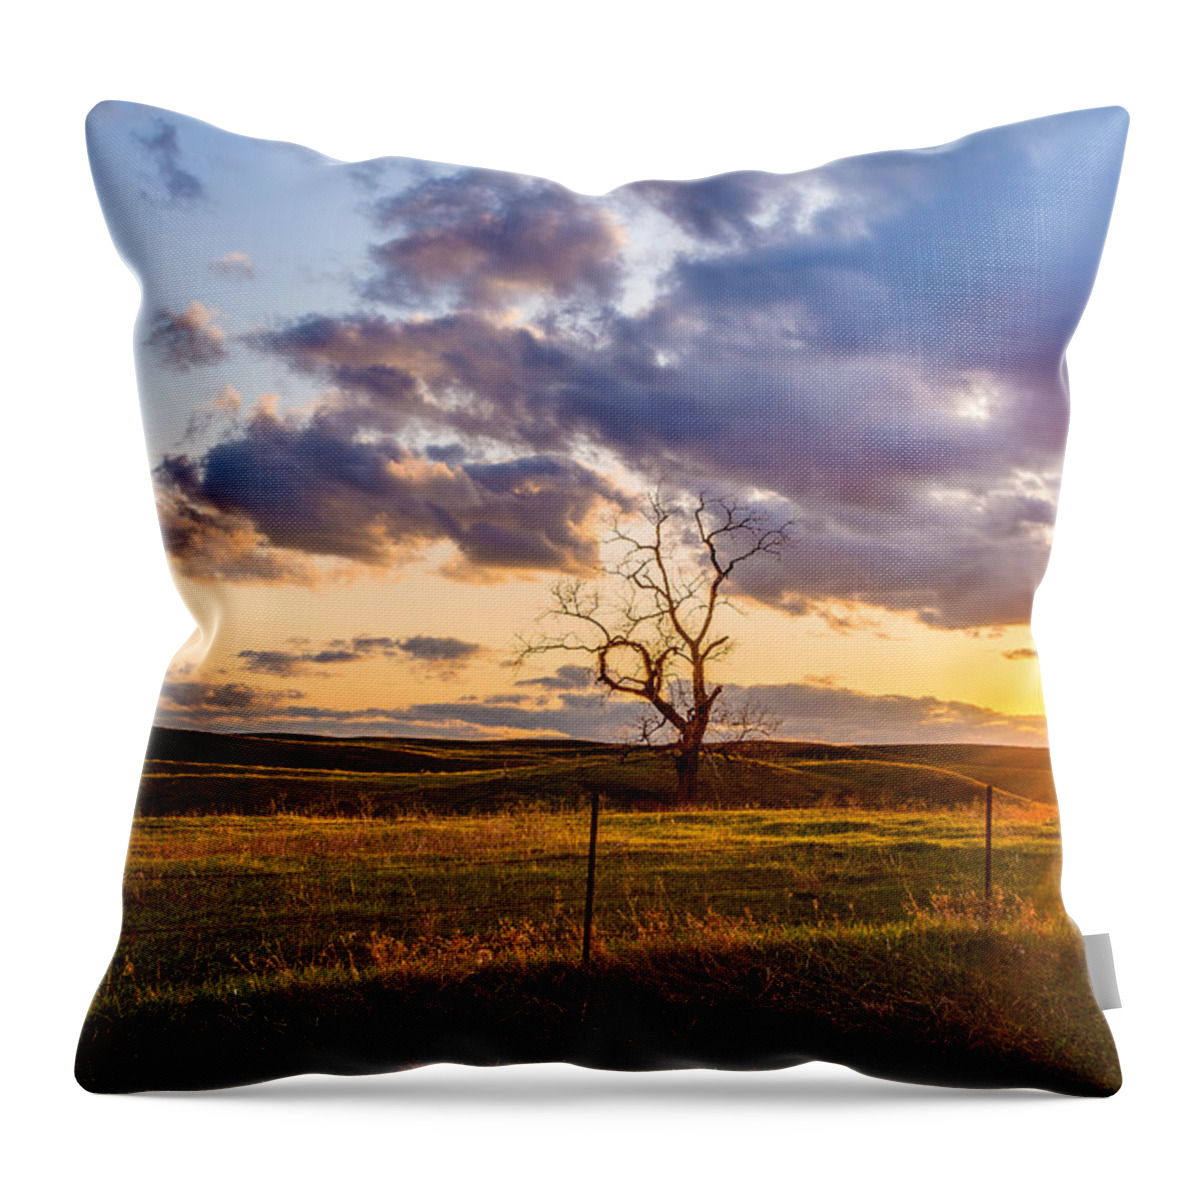 Sunset Sonata Throw Pillow featuring the photograph The Golden Hour by Adam Mateo Fierro